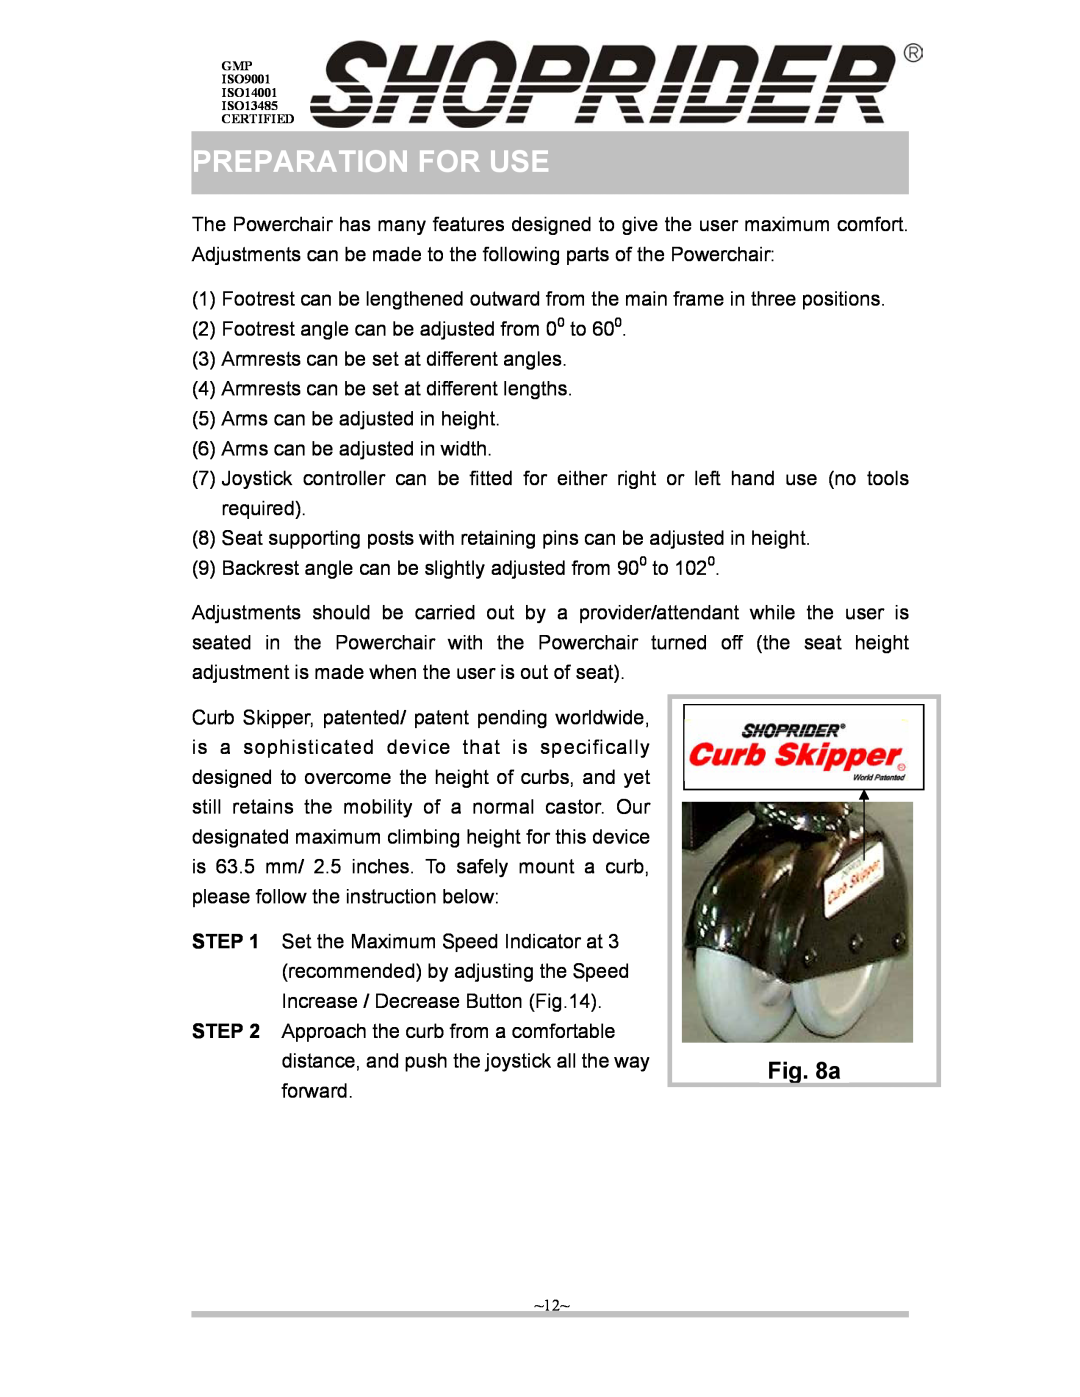 Shoprider Steamer 888WSB, Streamer 888WAB, Streamer 888WB, Wizz 888WNL, Jetstream-L 888WAL manual Preparation For Use 